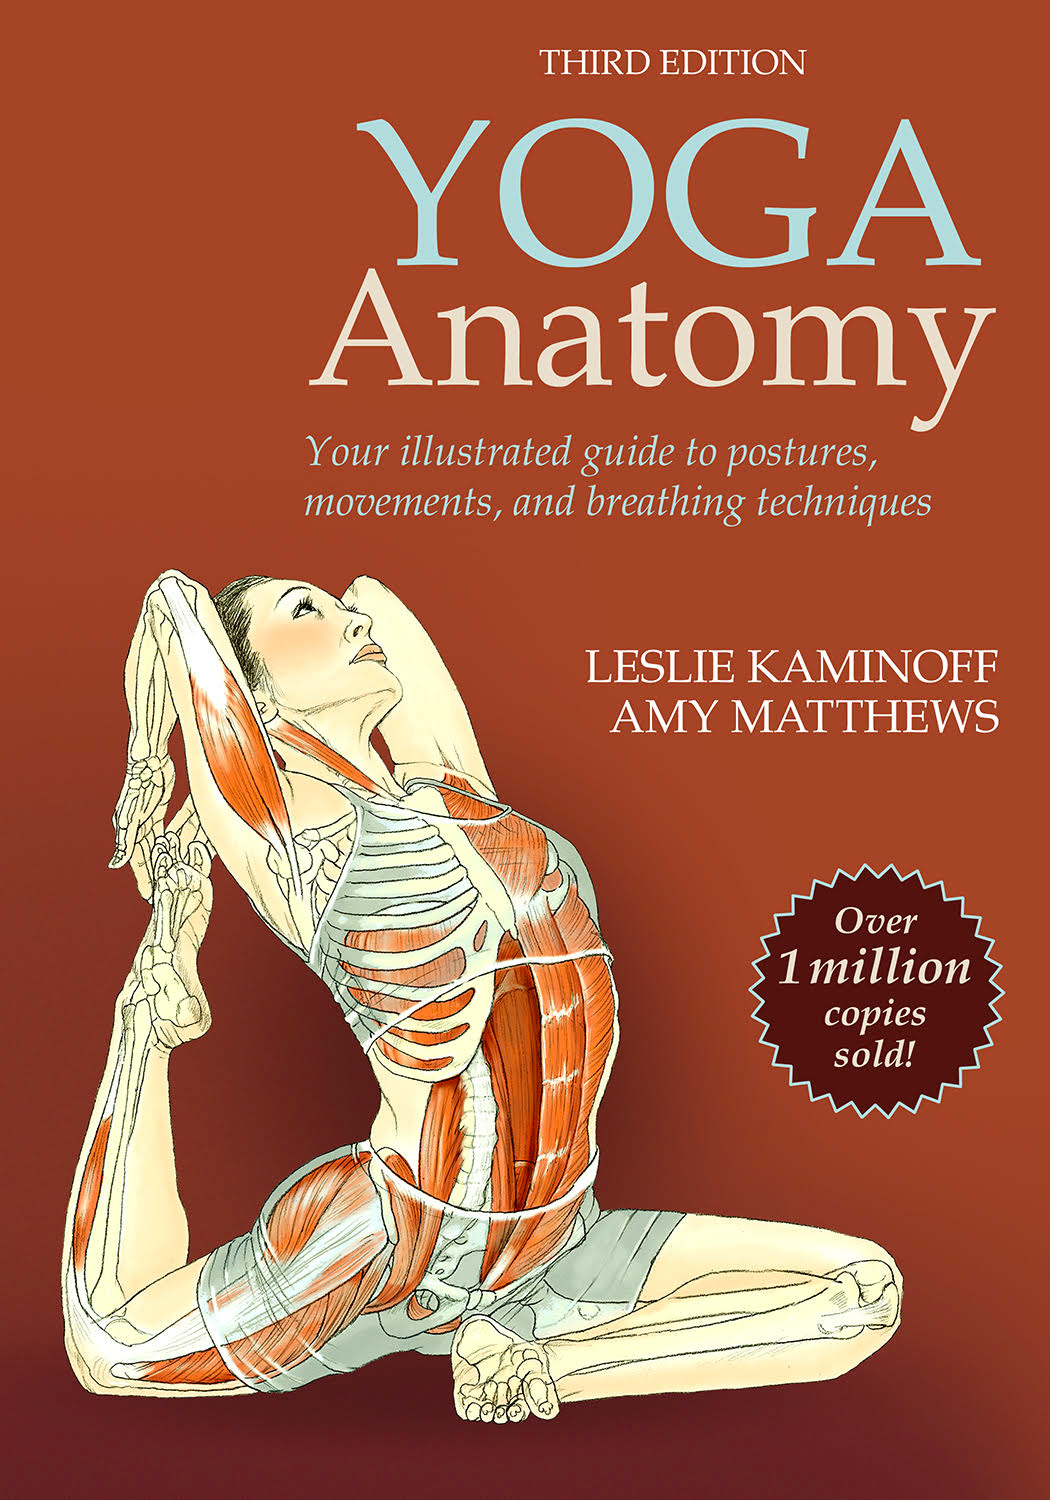 Leslie Kaminoff and Amy Matthews authors of Yoga Anatomy